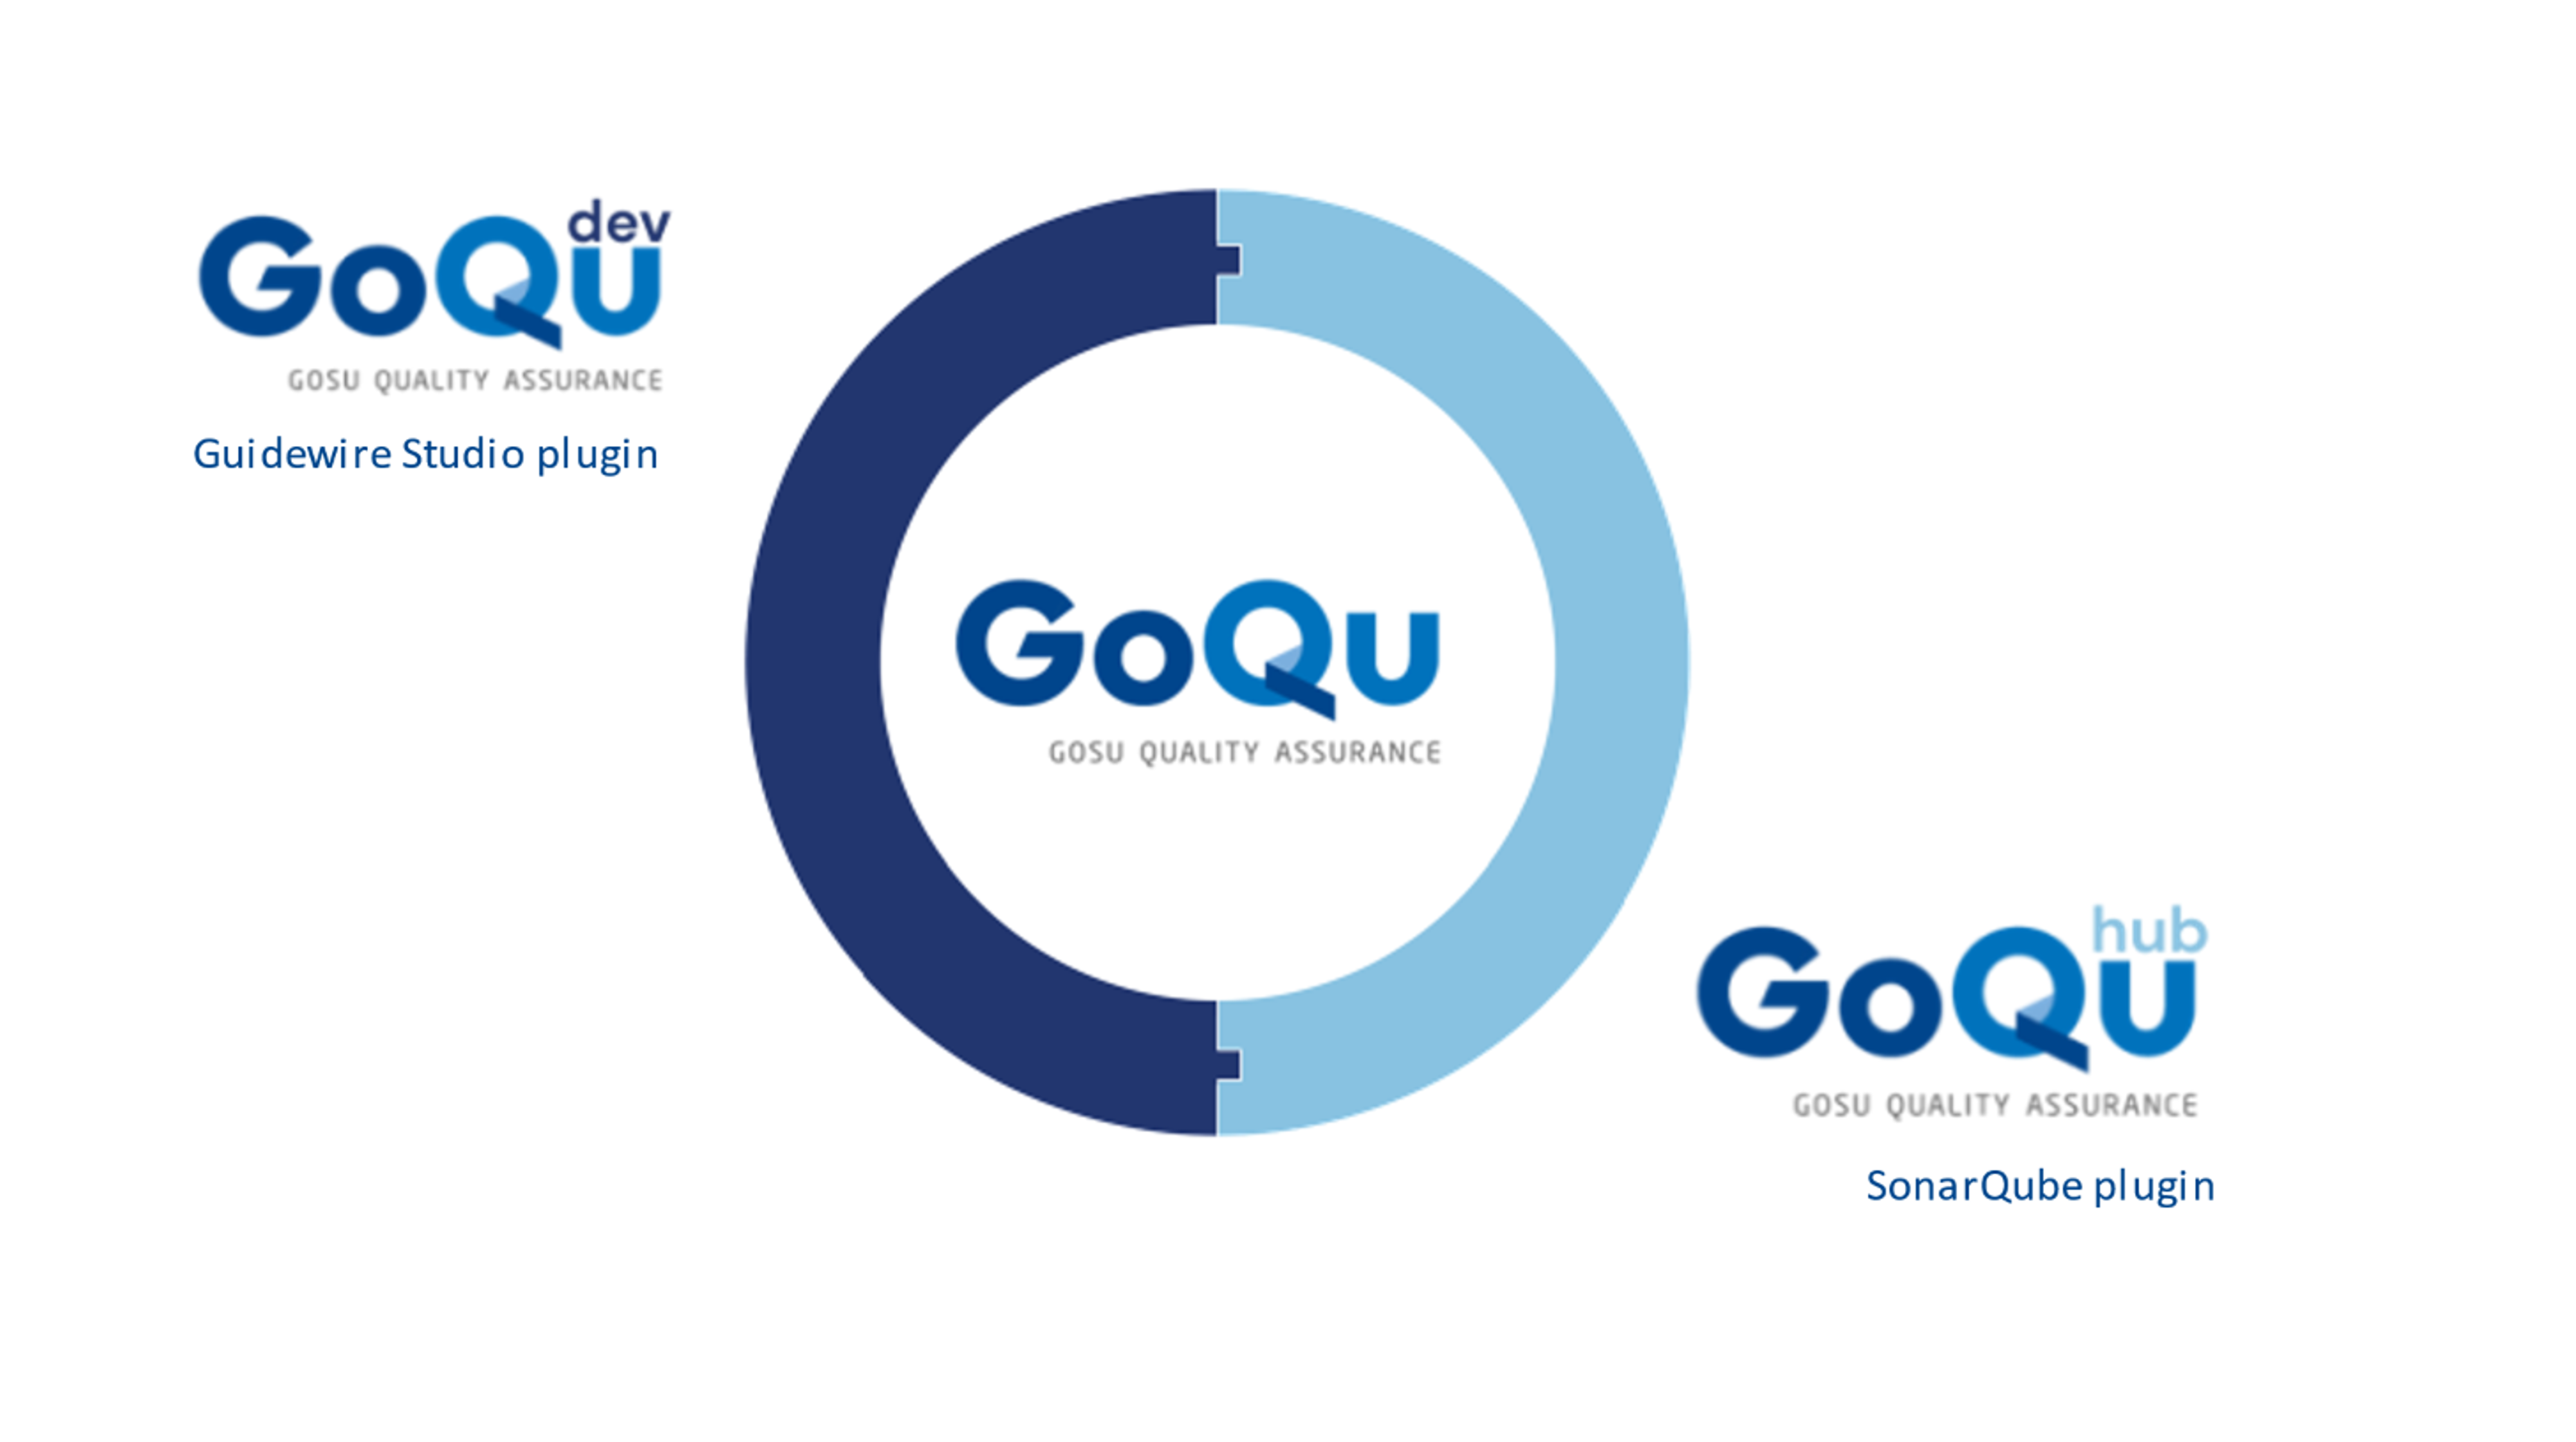 GoQu Dev & Hub